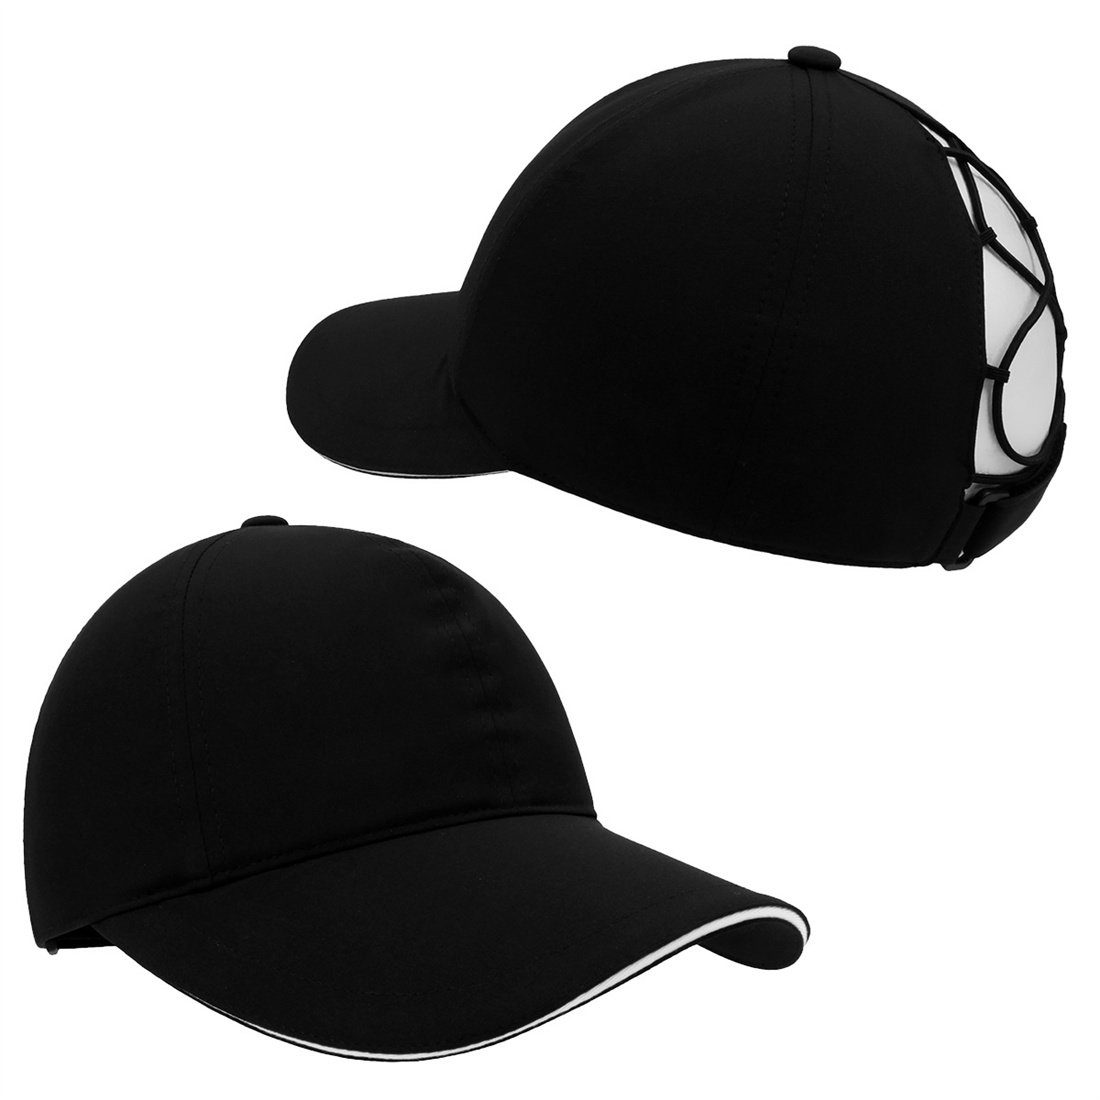 DÖRÖY Baseball Cap Outdoor-Baseballkappe für Frauen,schnell trocknende Kappe,Sonnenblende Schwarz